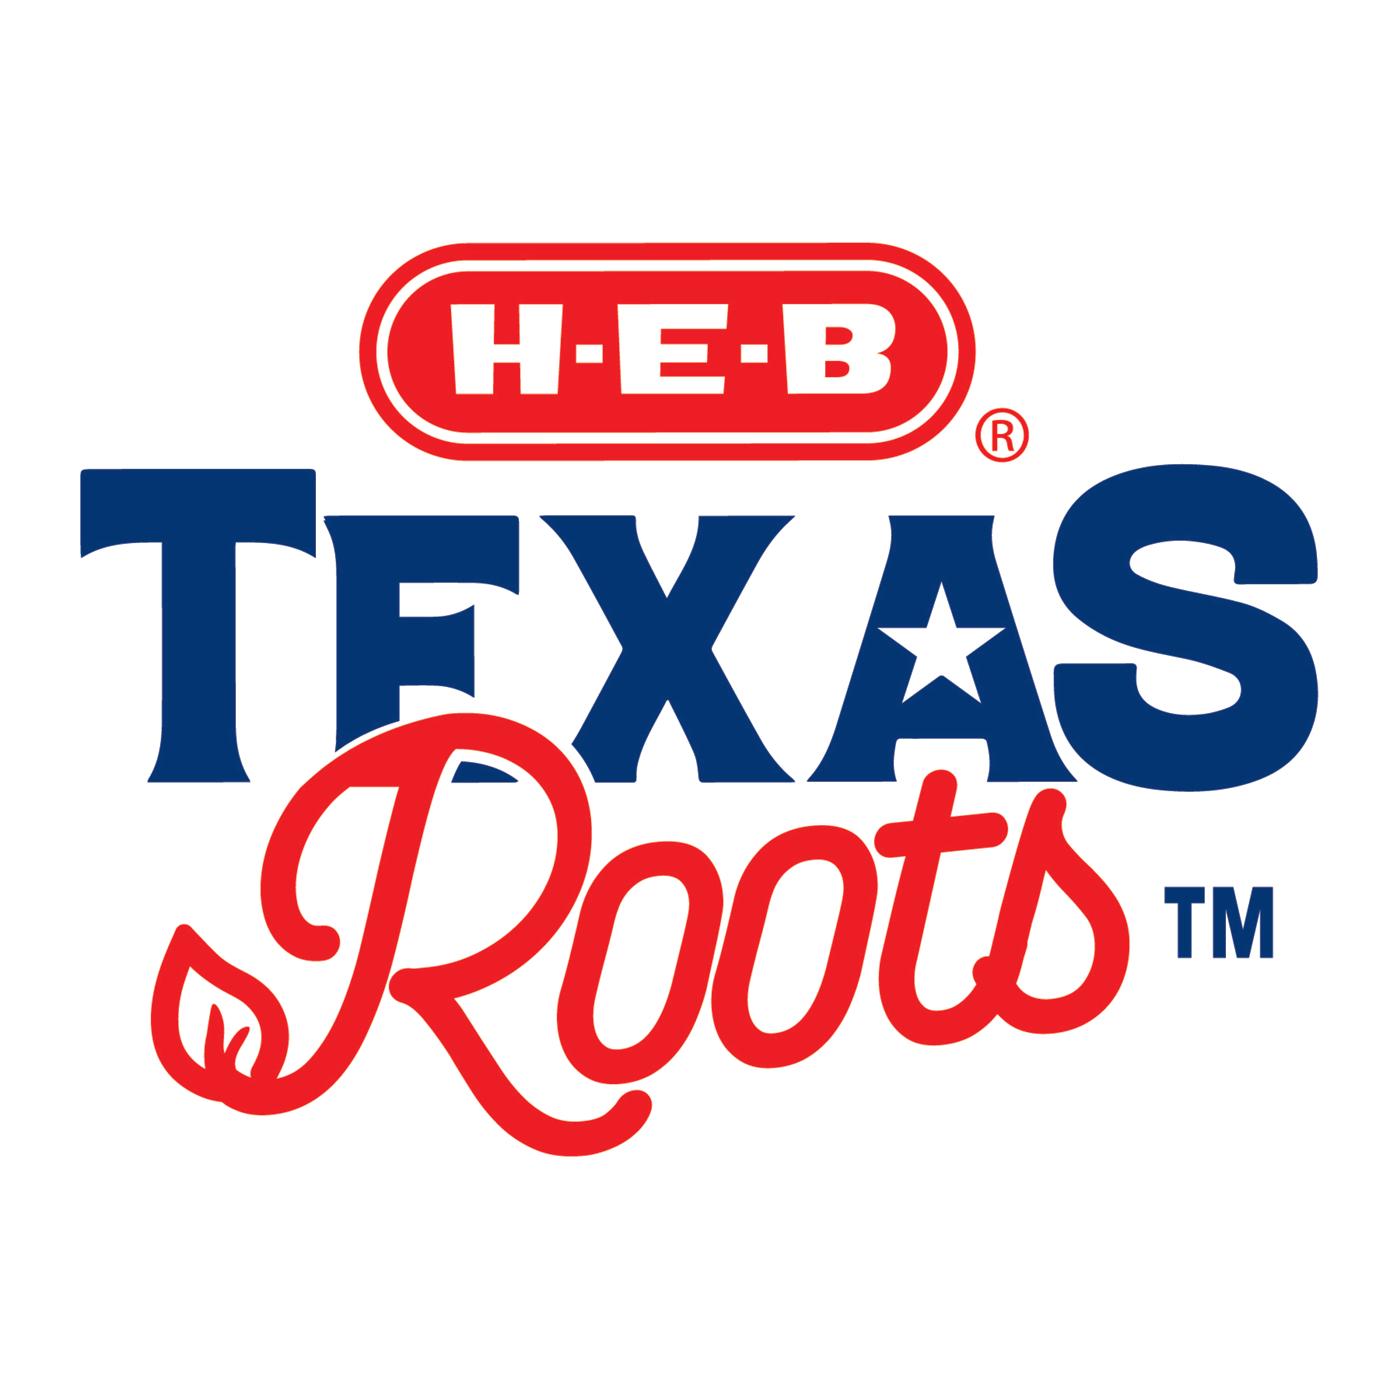 H-E-B Texas Roots Portulaca Happy Hour Rosita; image 3 of 3